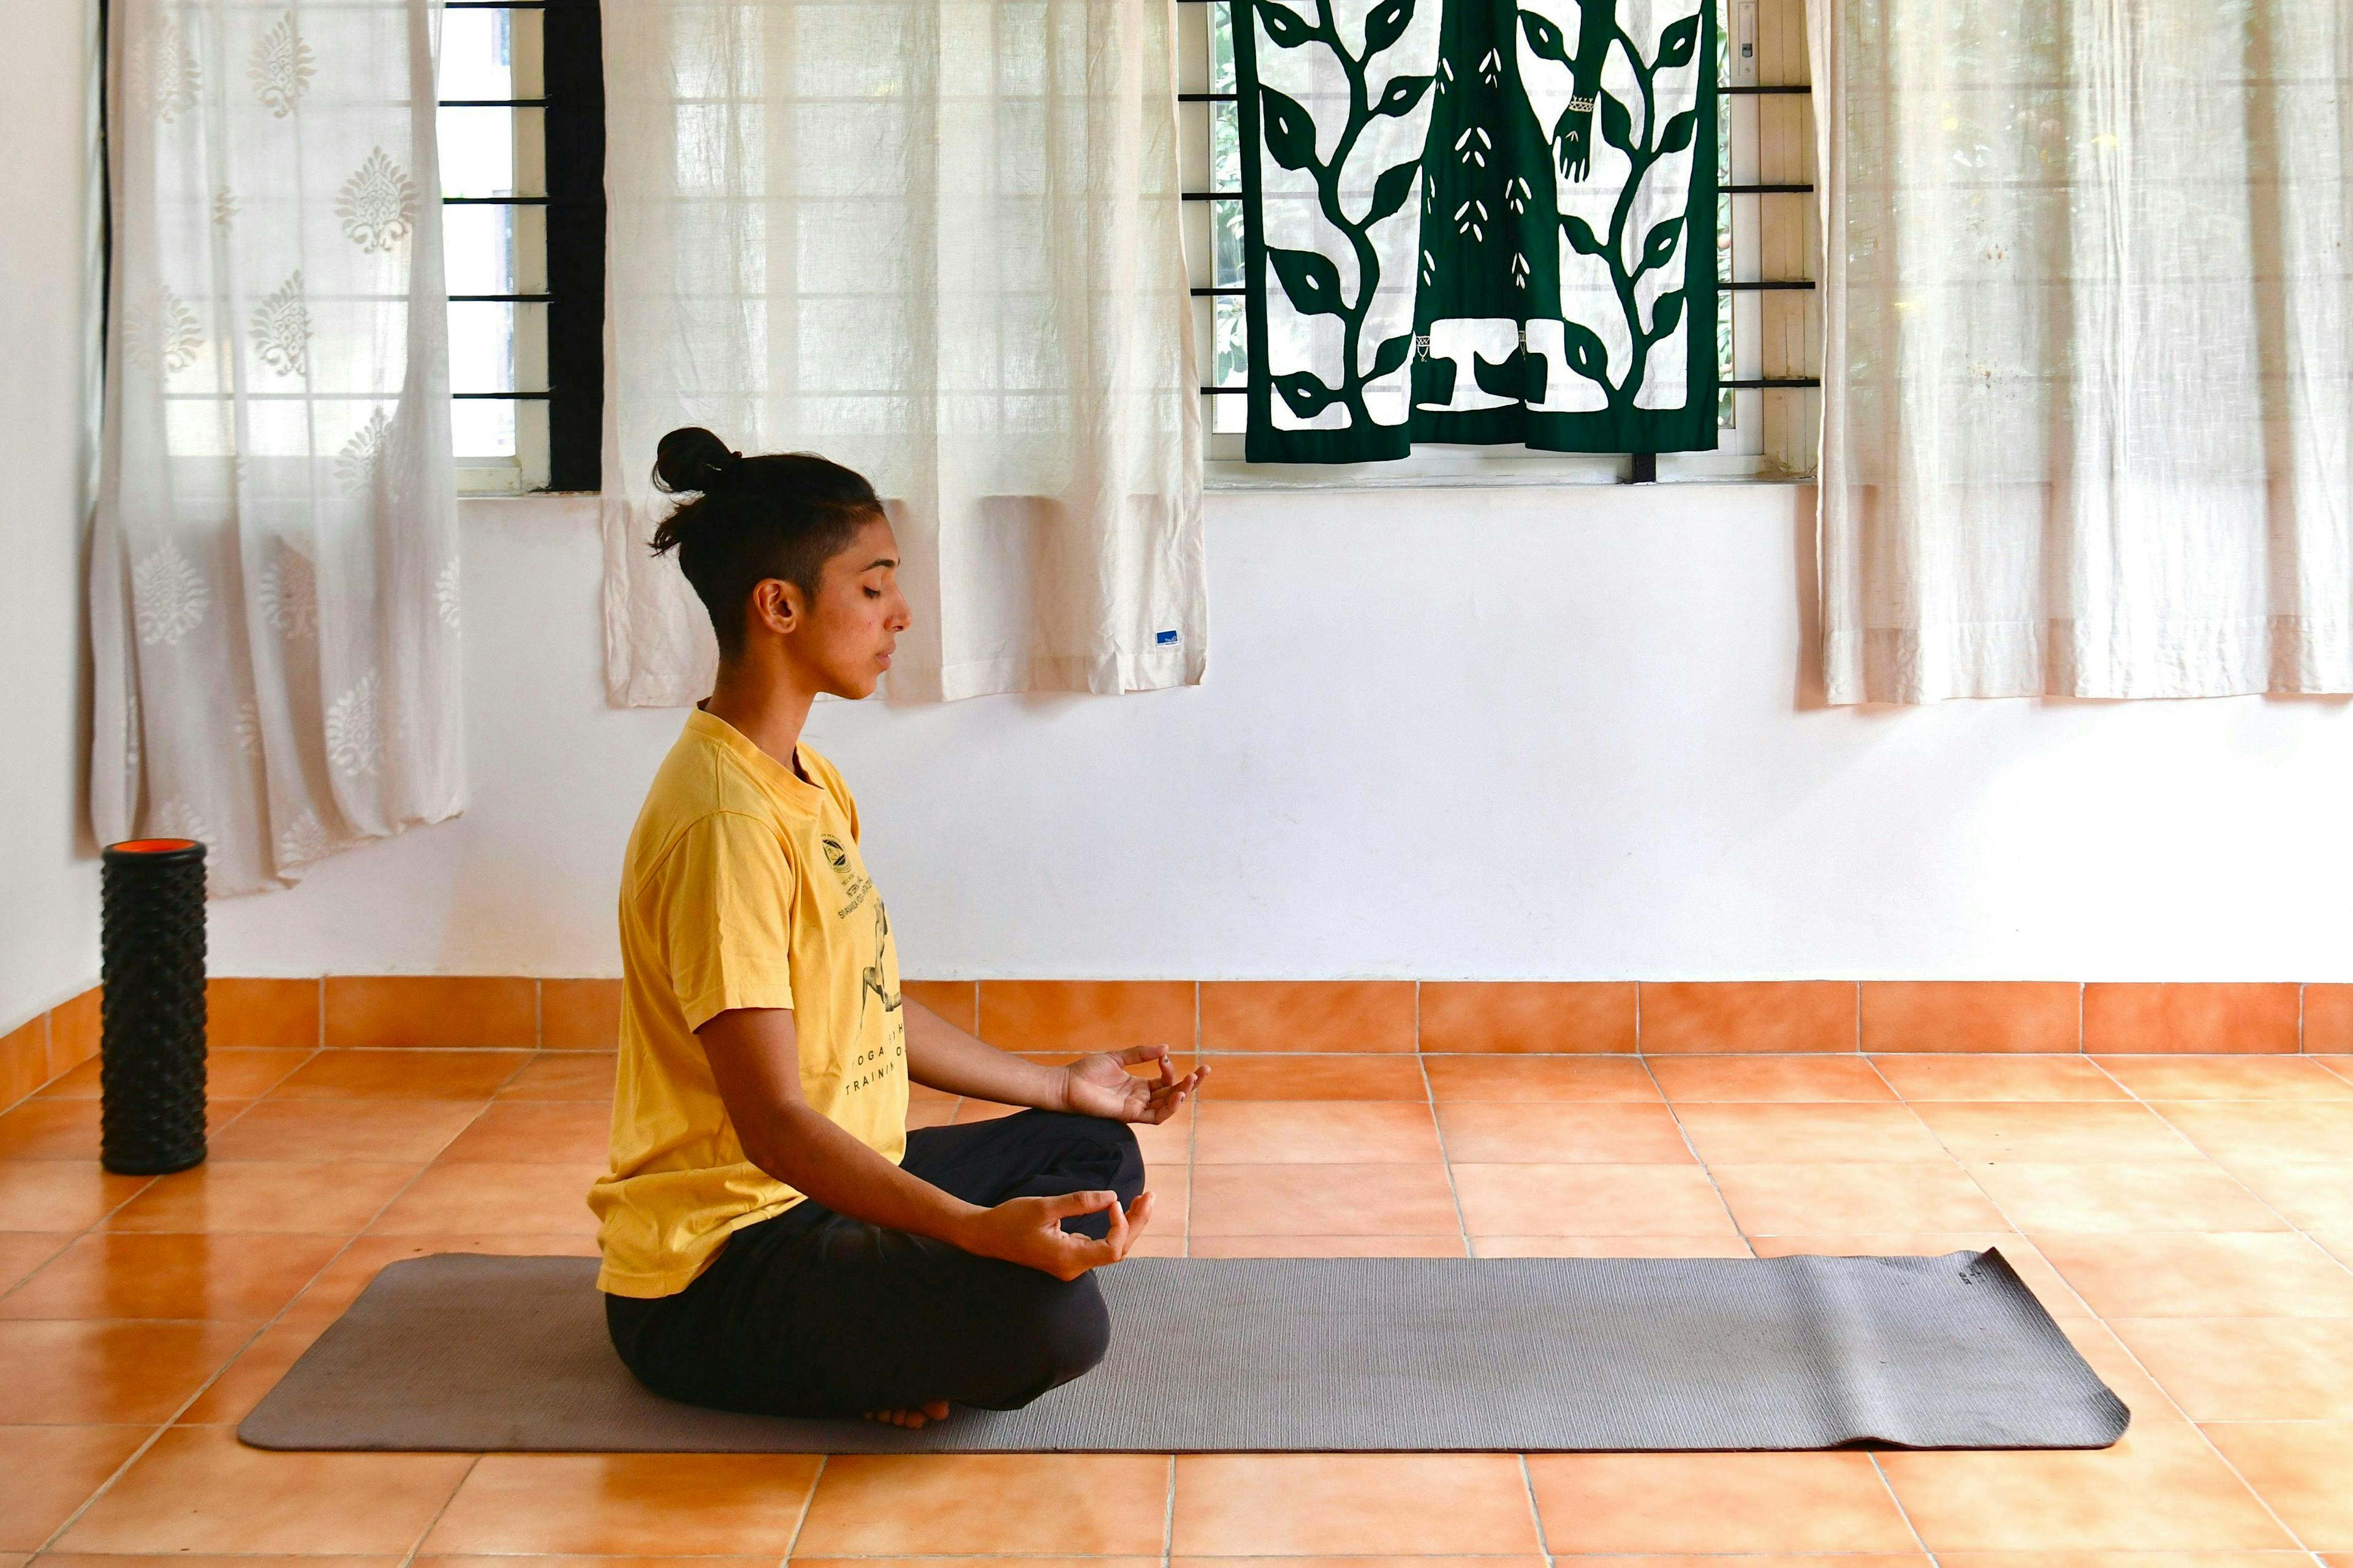 dance horizontal bangalore person fitness pilates sport working out yoga lotus yoga pose home decor rug